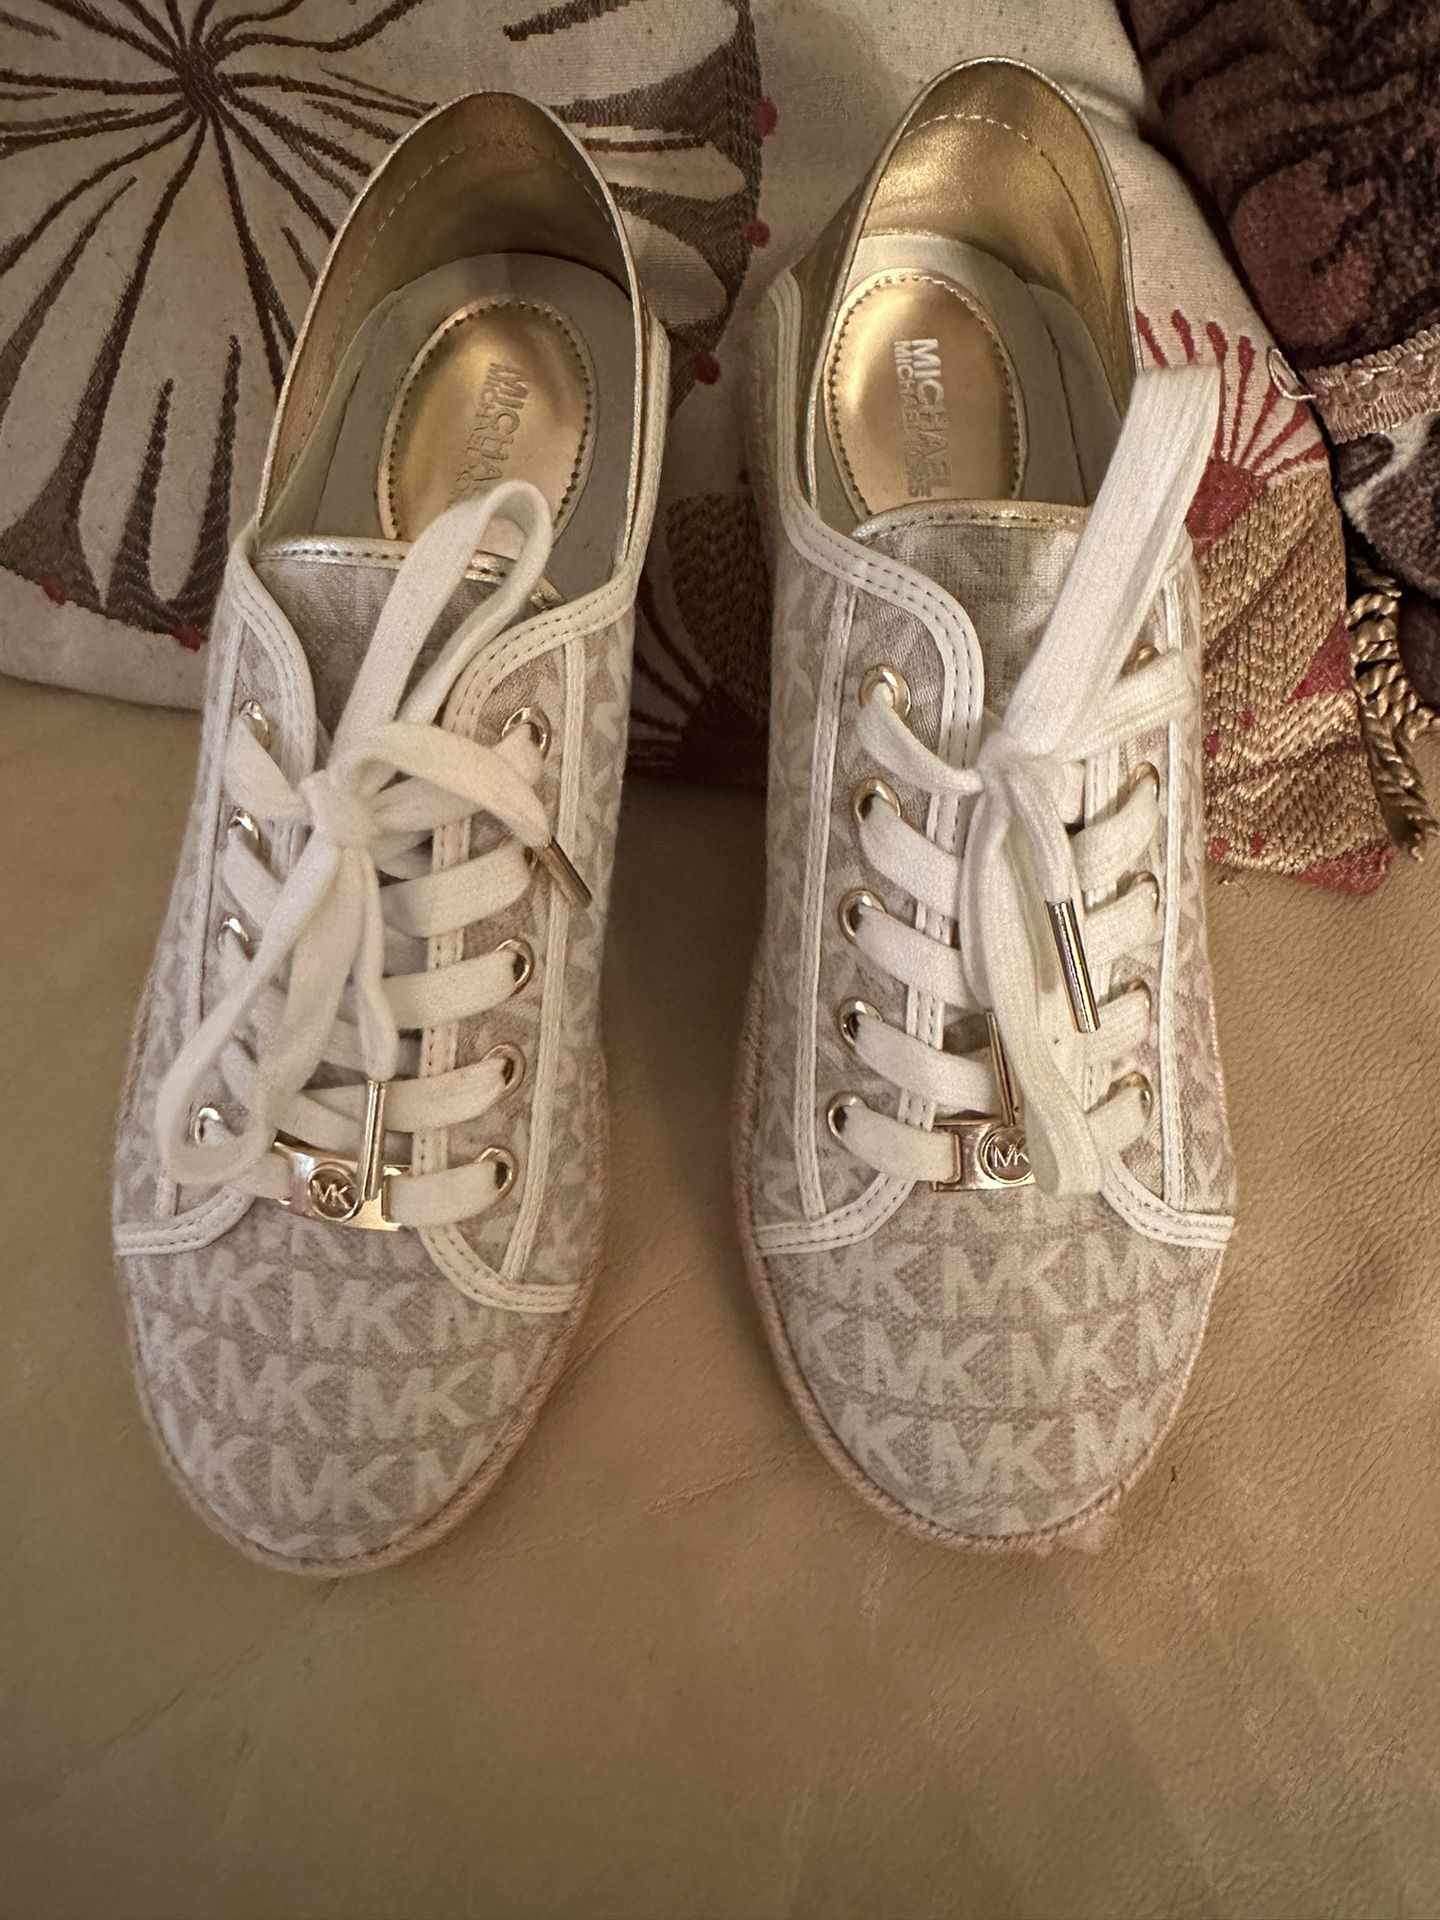 New Michael Kors Ladies Shoes Size 7 125 Bucks 